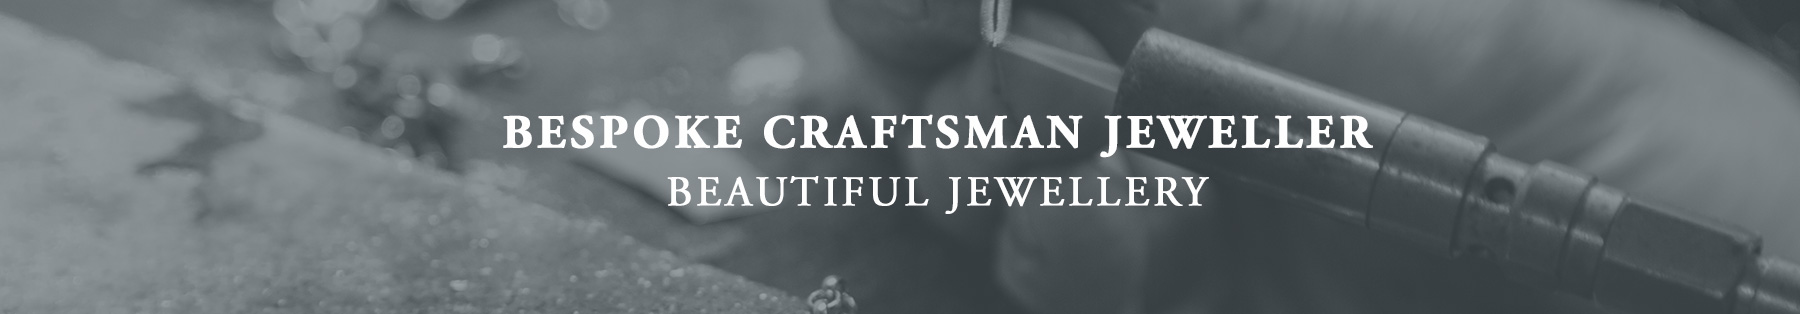 Bespoke Craftsman Jeweller